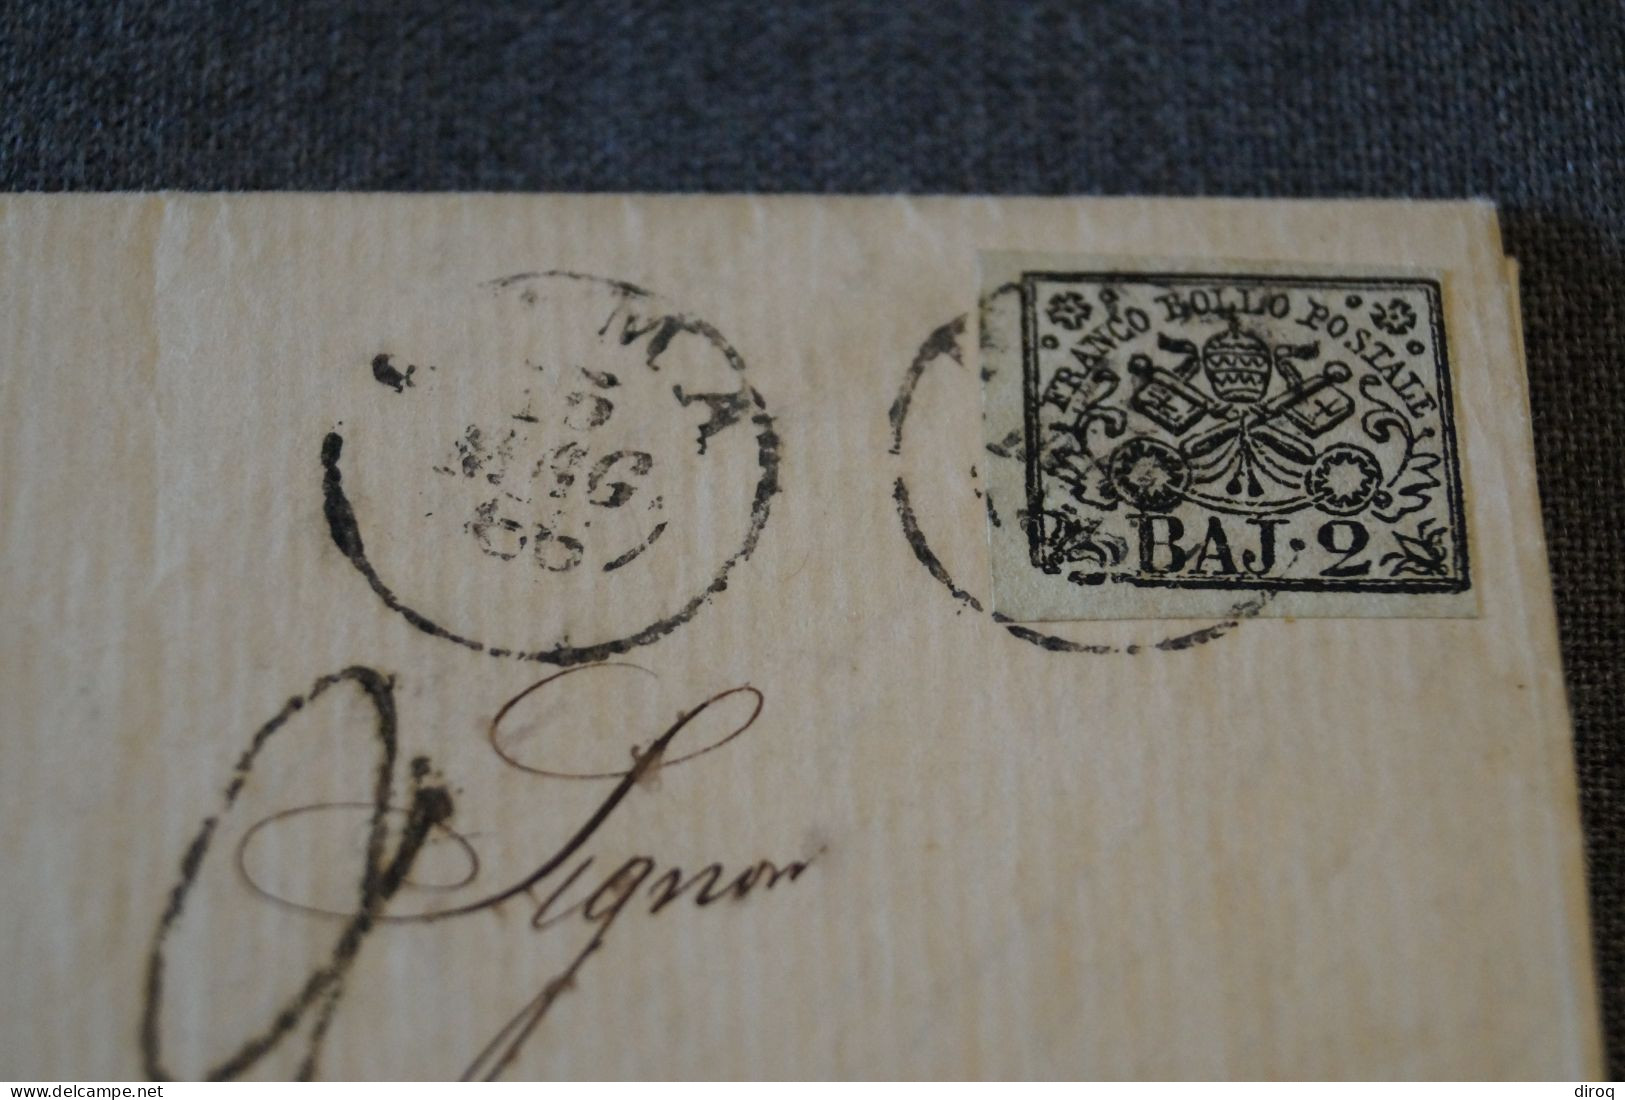 Ancien Envoi Franco Bollo Postale BAJ-2, Italia 1866,courrier à Identifier,pour Collection - Kerkelijke Staten